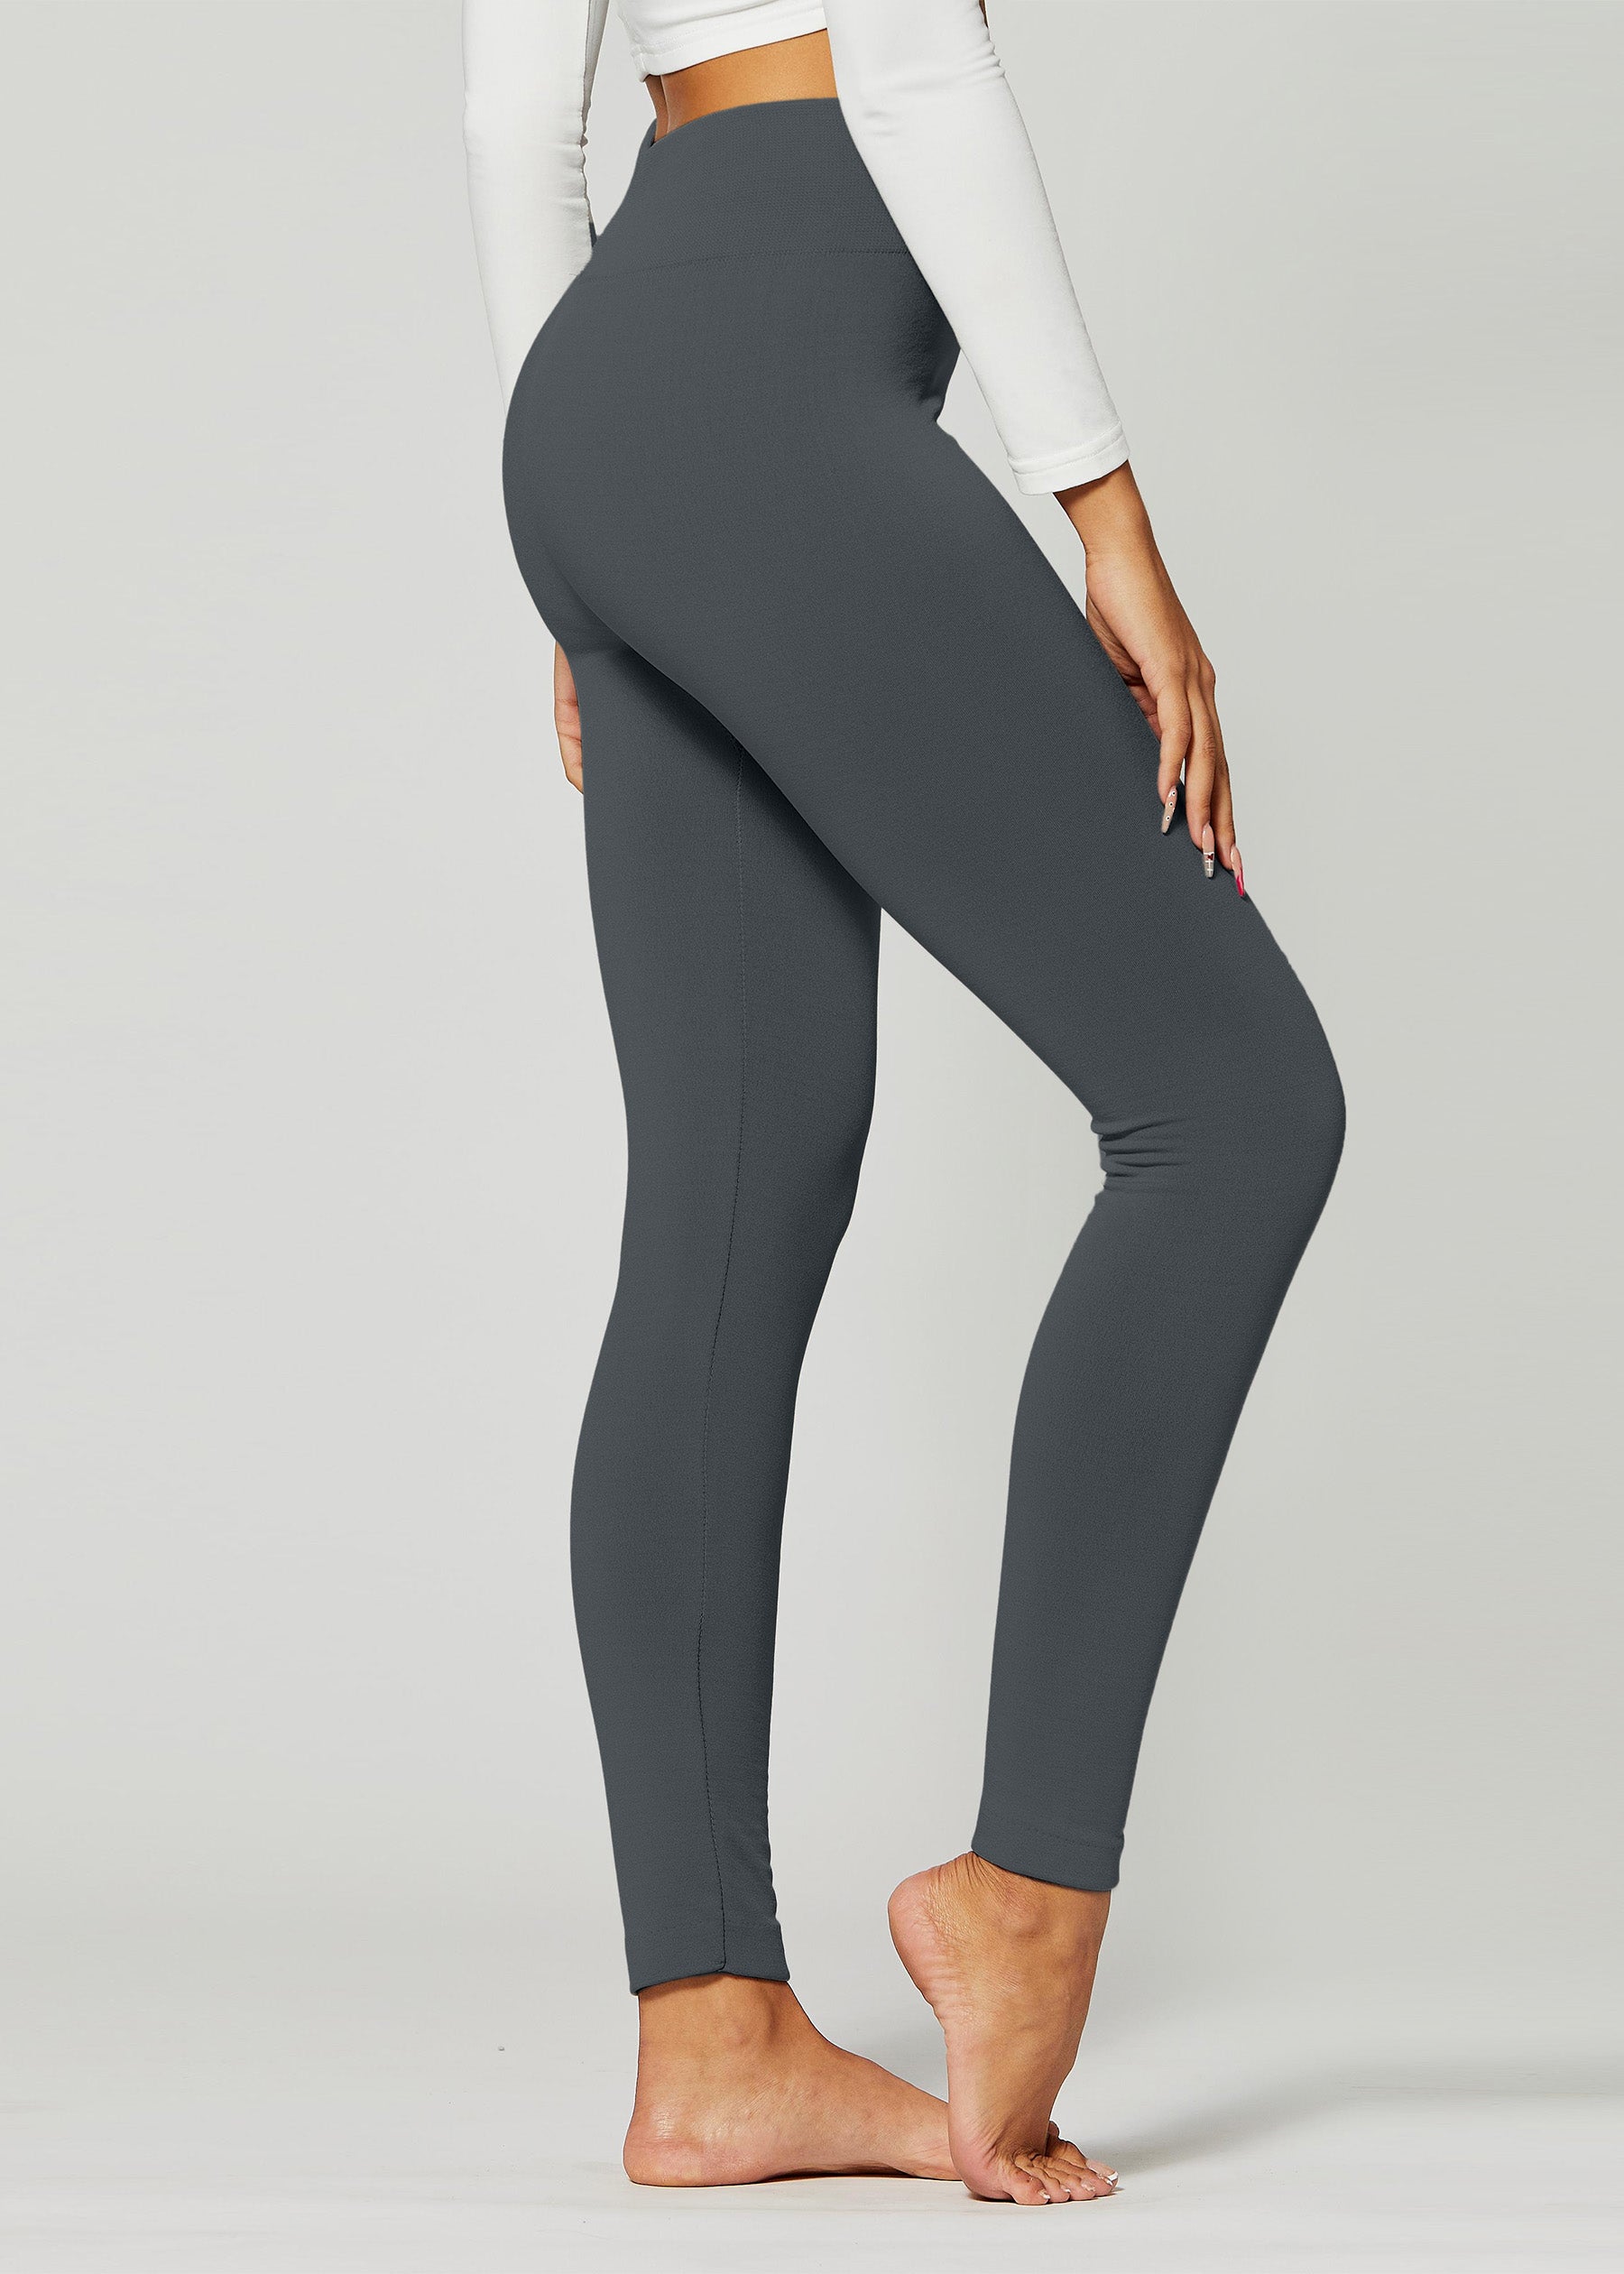 Nike Pro Fleece-Lined Dri-Fit Leggings | Workout leggings, Clothes design,  Leggings